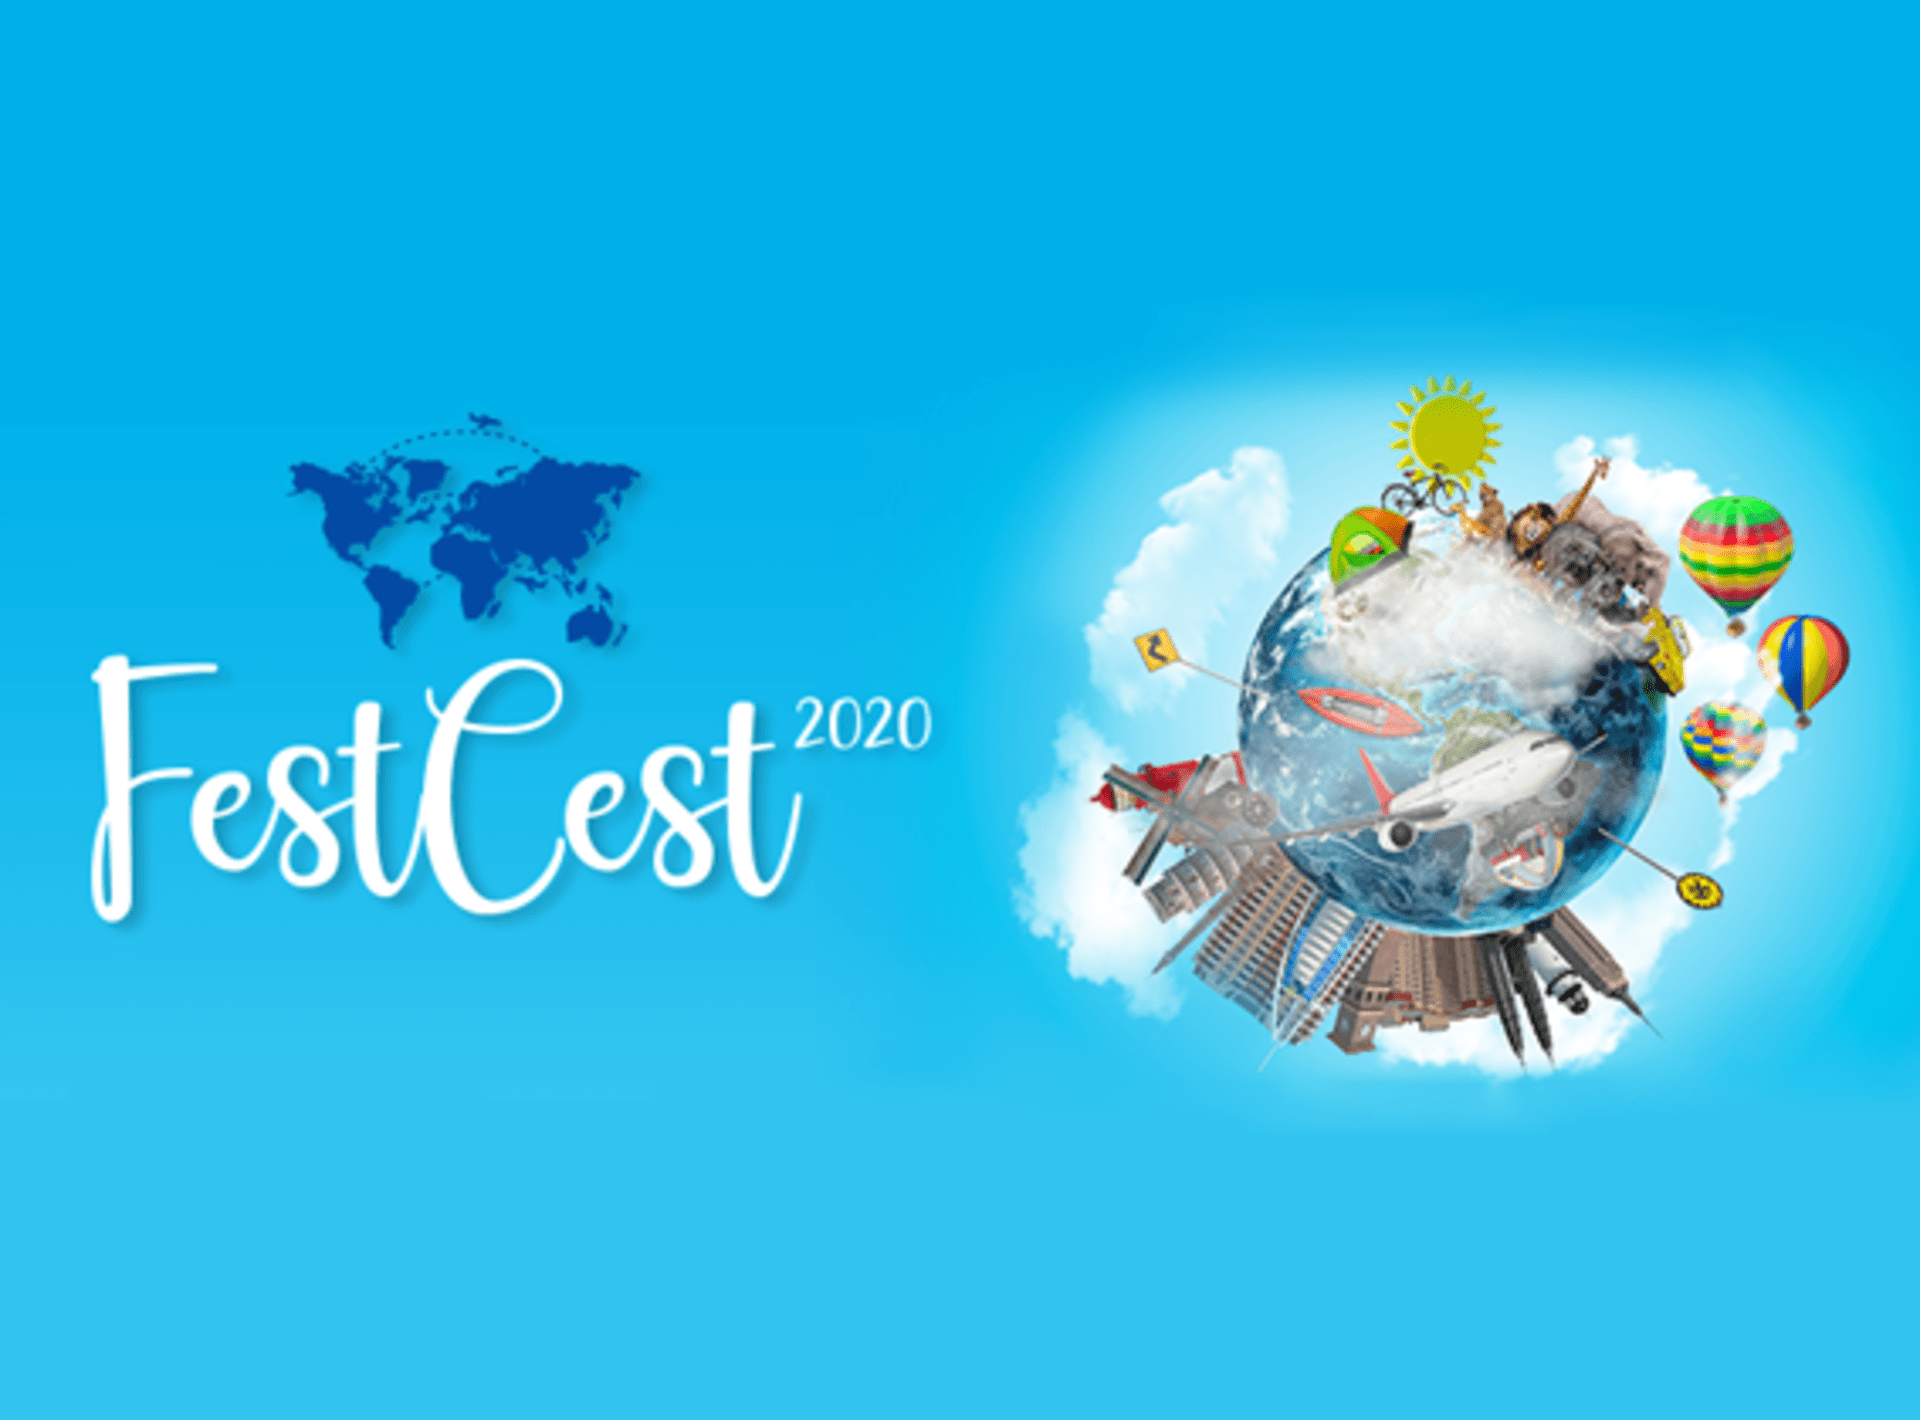 FestCest